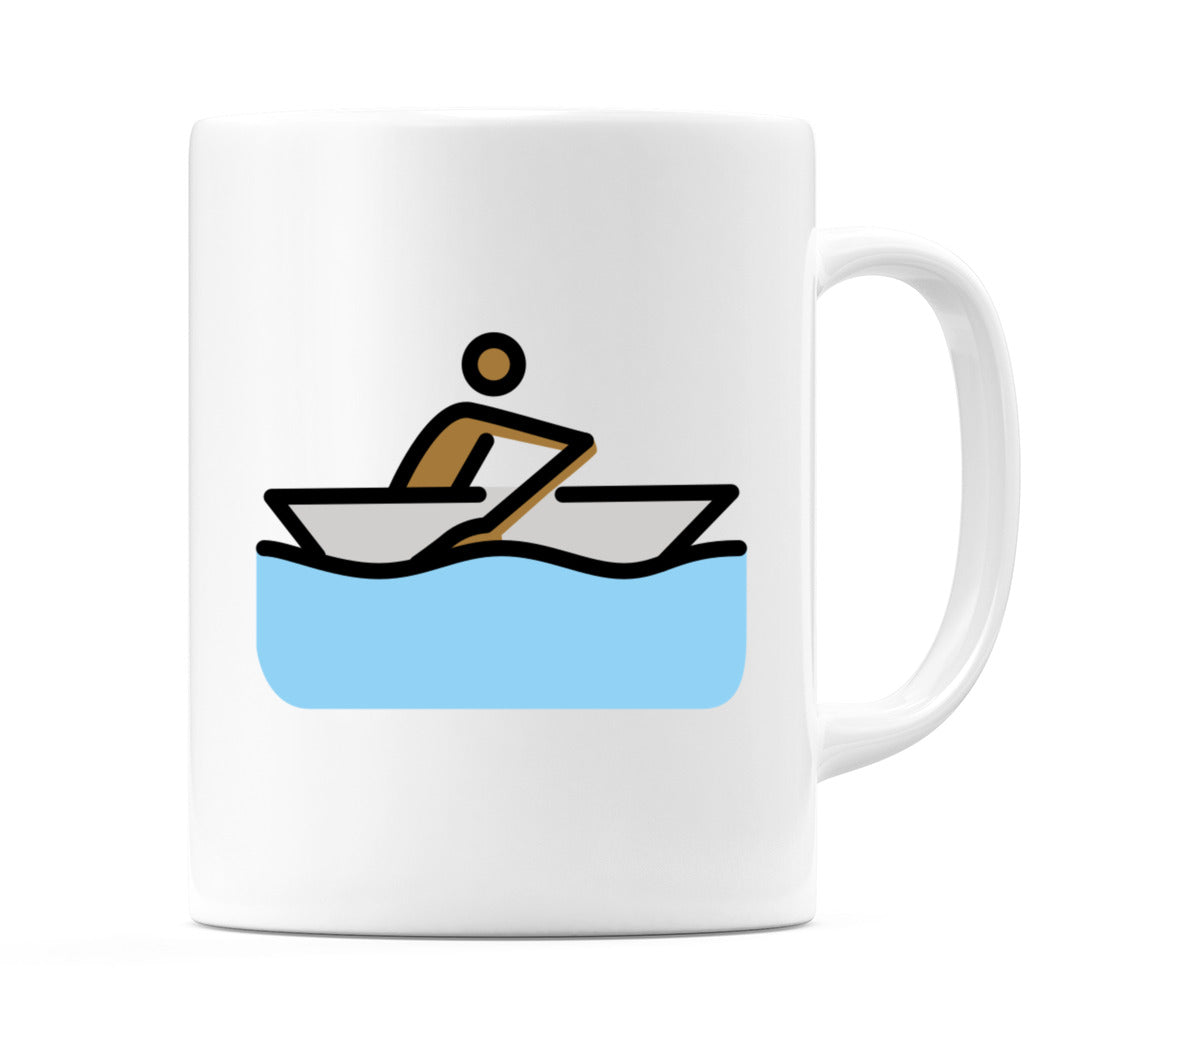 Male Rowing Boat: Medium-Dark Skin Tone Emoji Mug